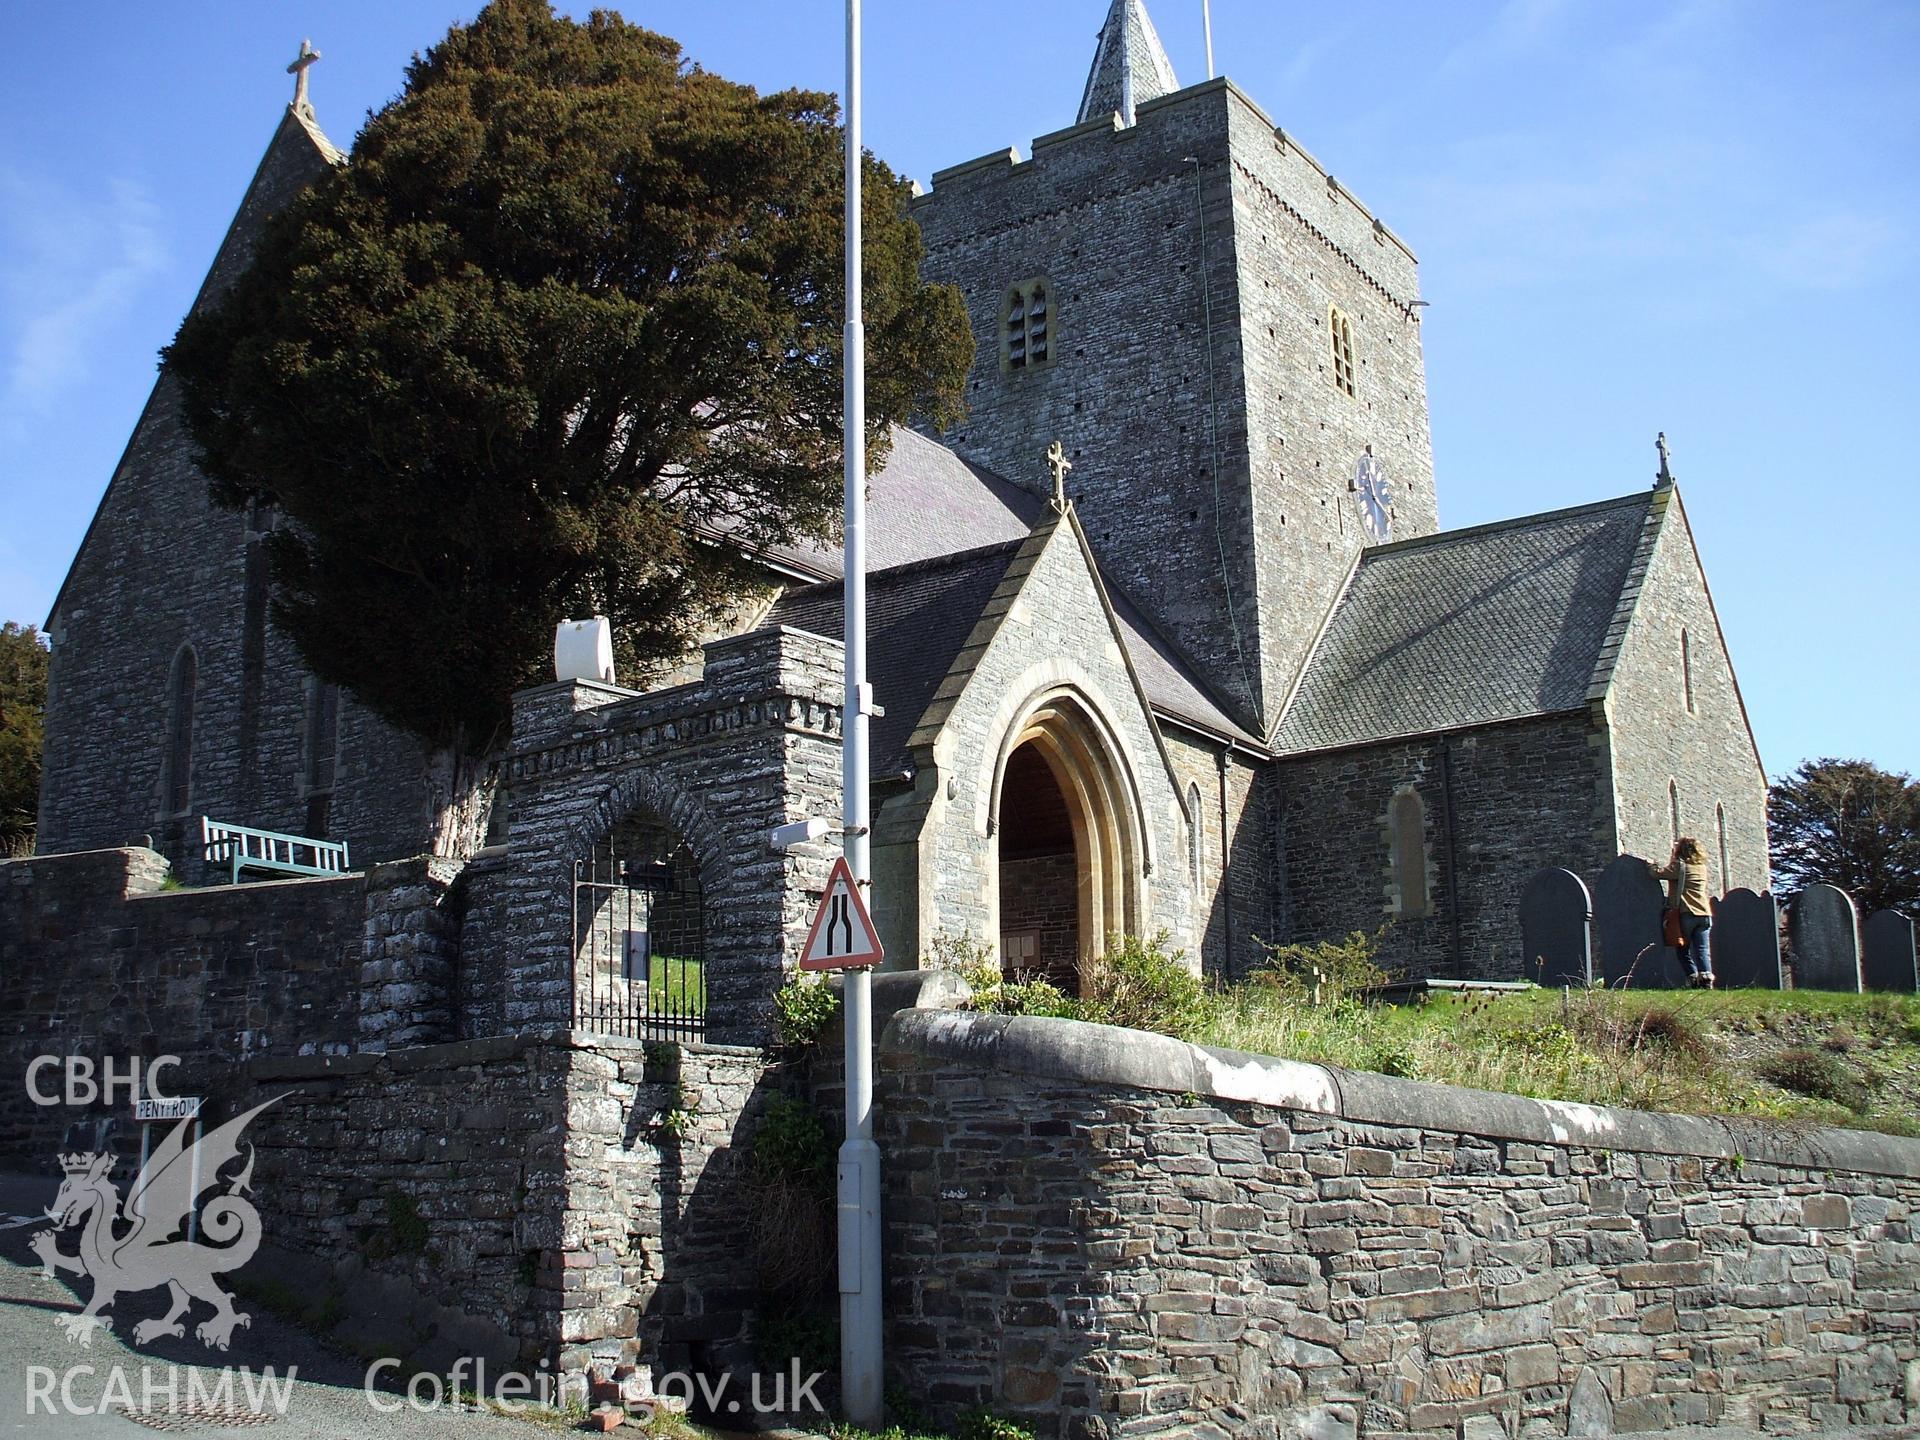 Colour digital photograph showing the exterior of St. Padarn's Church, Llanbadarn Fawr.